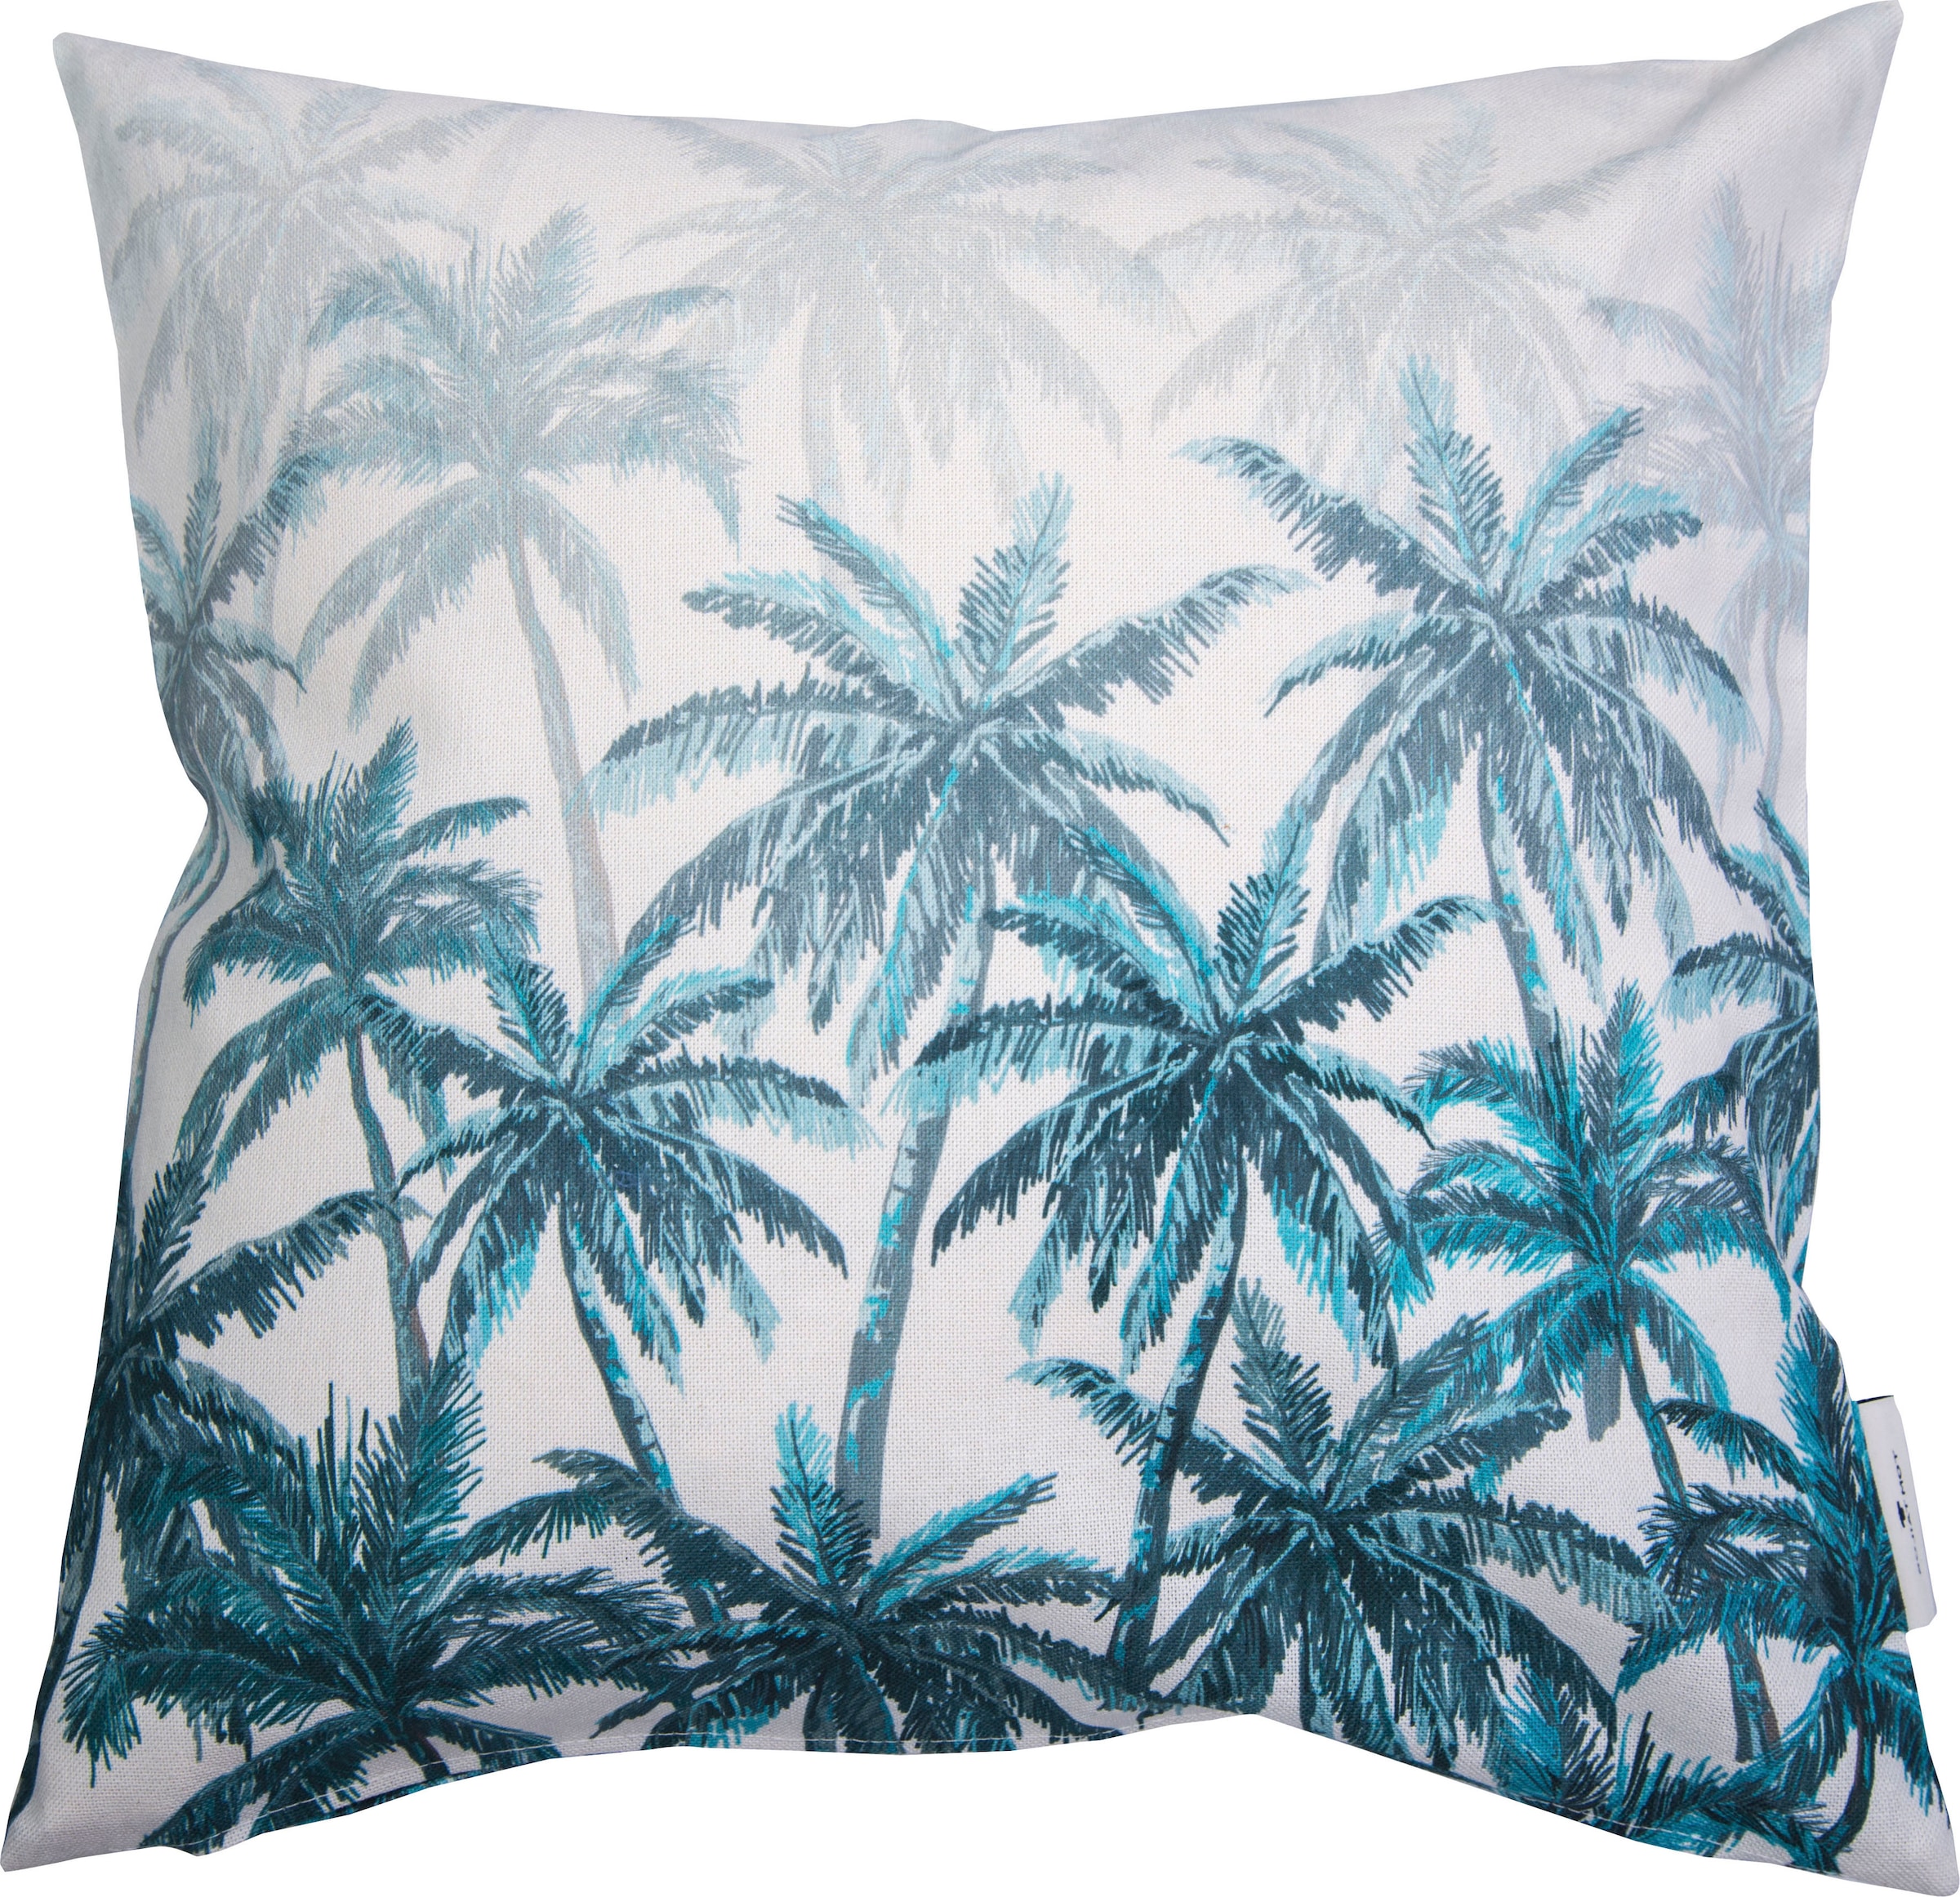 TOM TAILOR HOME Dekokissen »Blurred Palm Forest«, mit Palmenmotiven, Kissenhülle ohne Füllung, 1 Stück